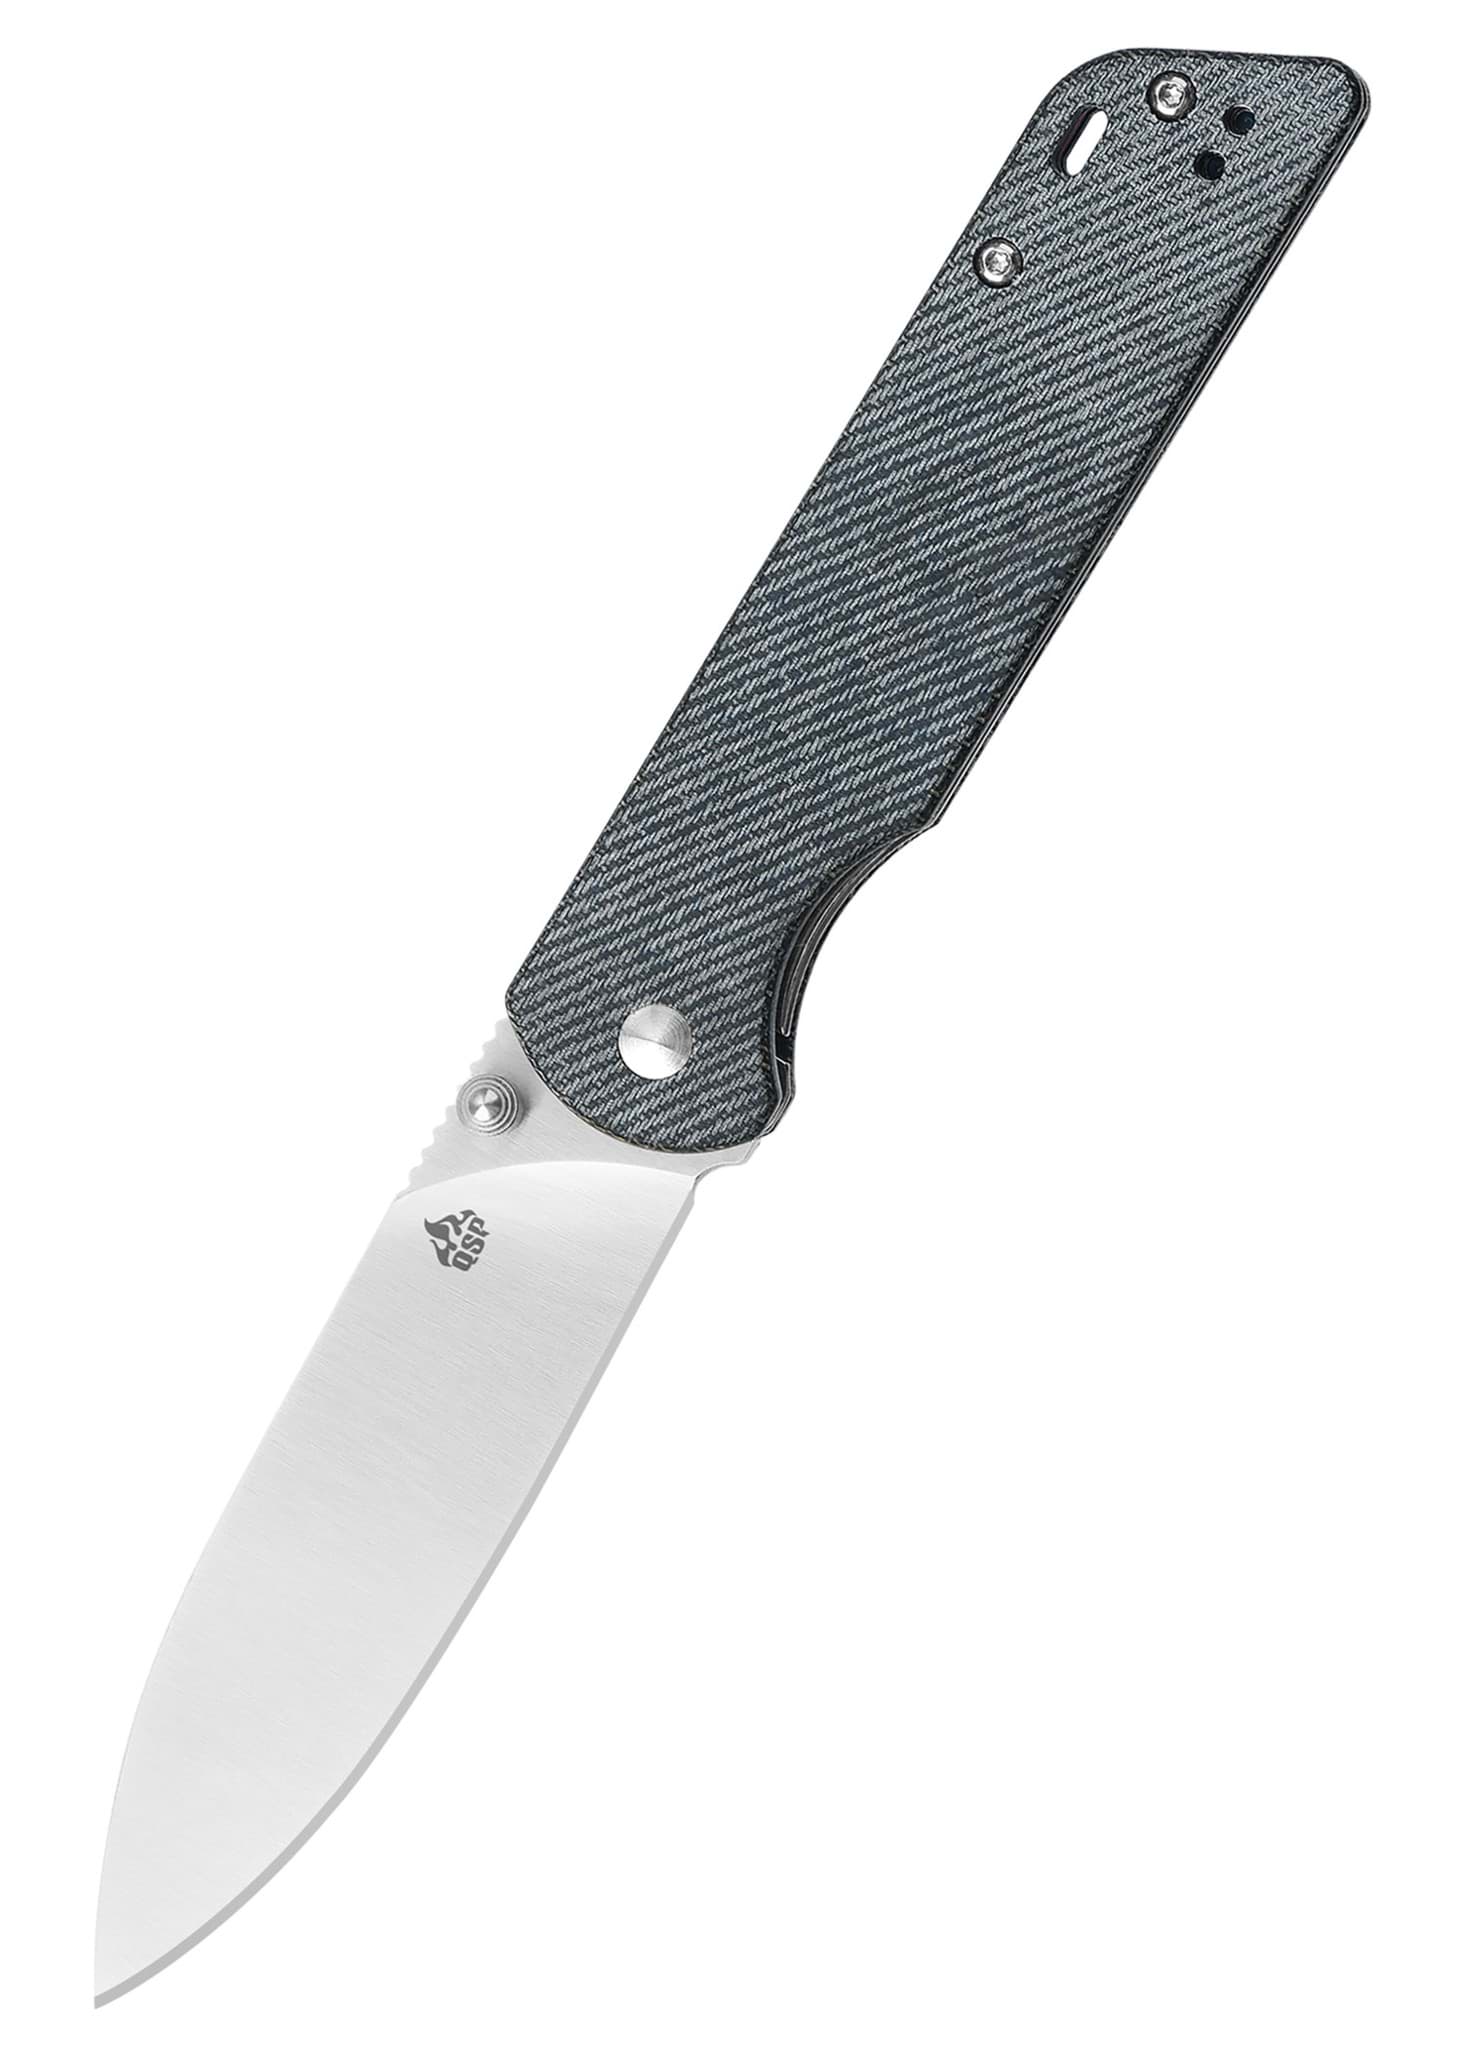 Picture of QSP Knives - Parrot Satin Denim Micarta Handle